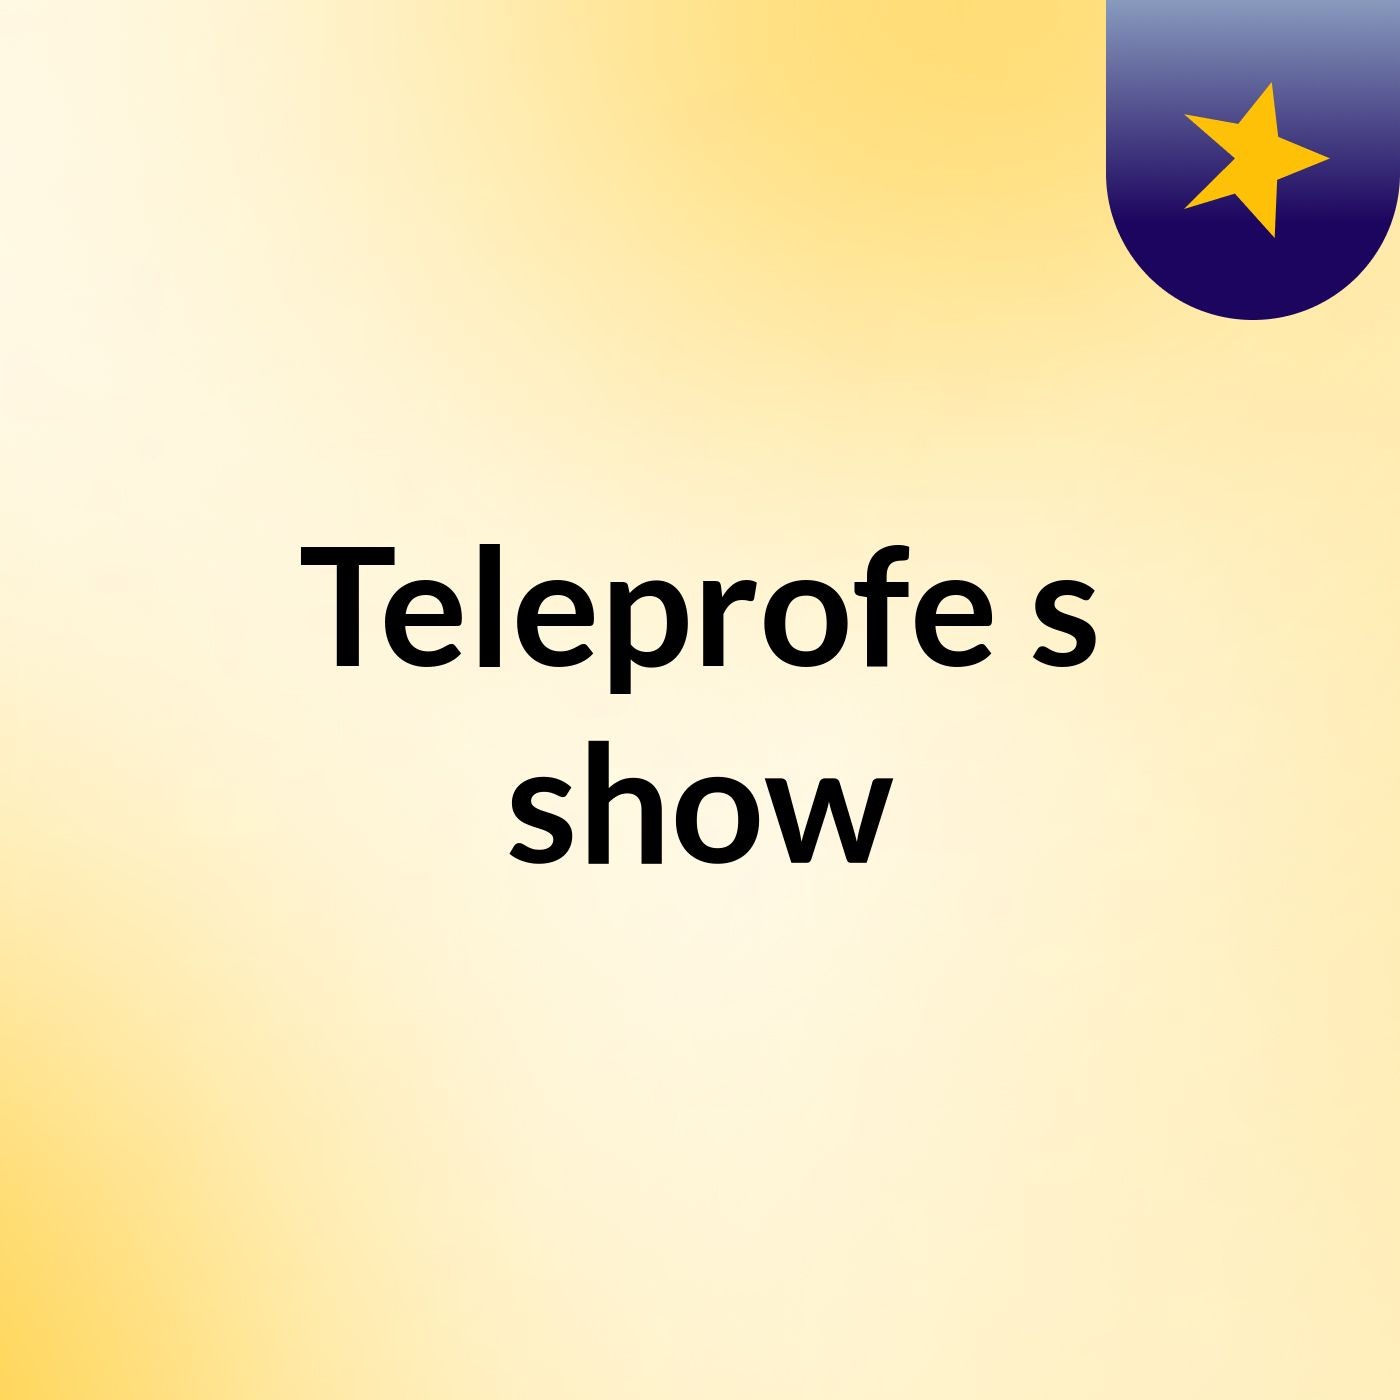 Teleprofe's show